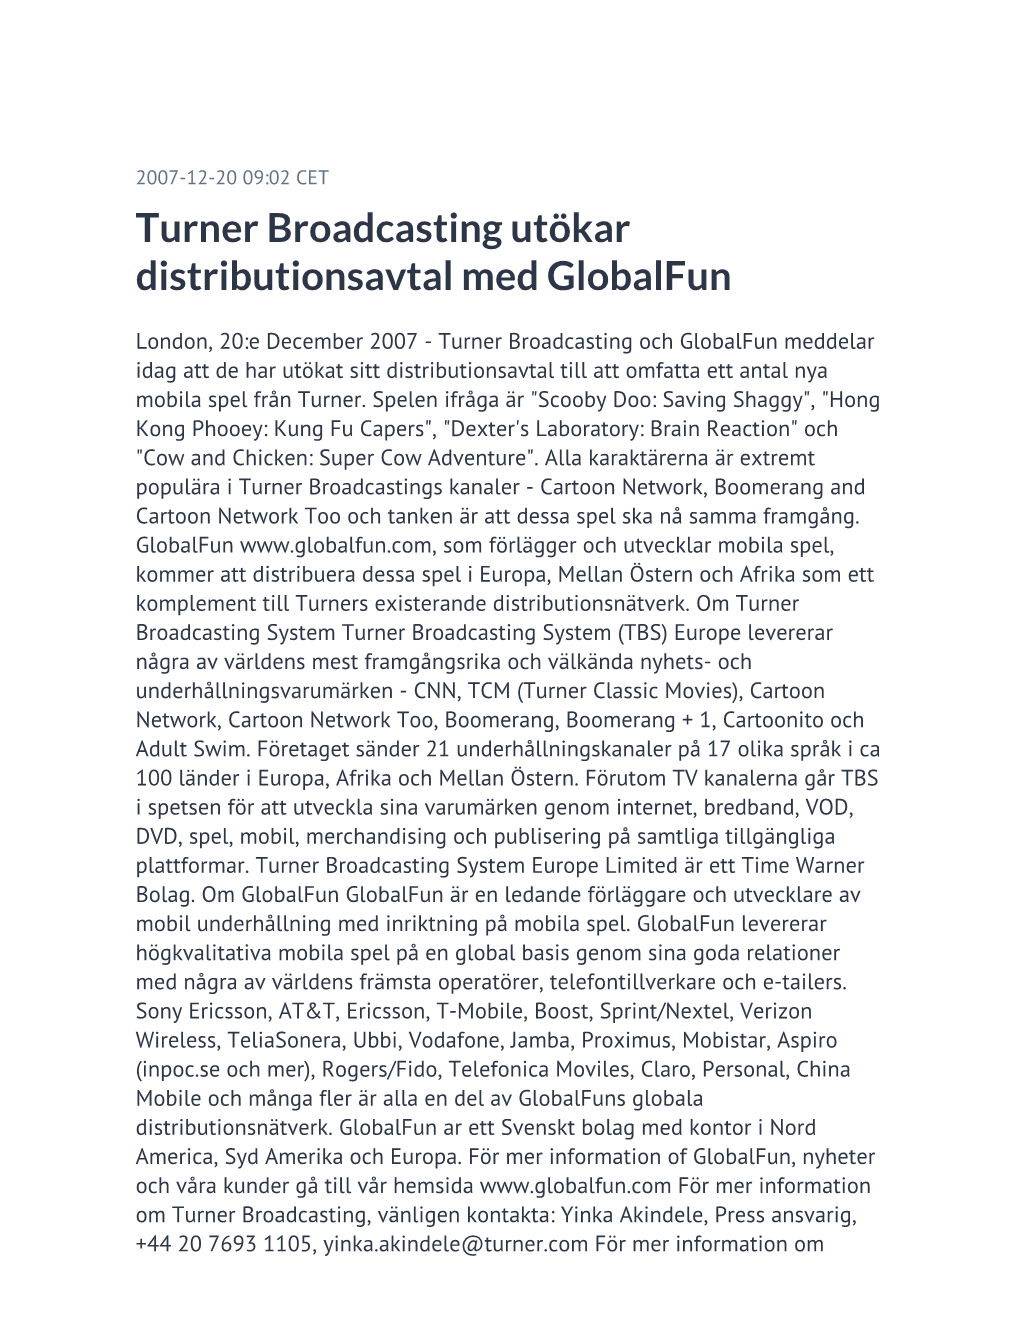 Turner Broadcasting Utökar Distributionsavtal Med Globalfun